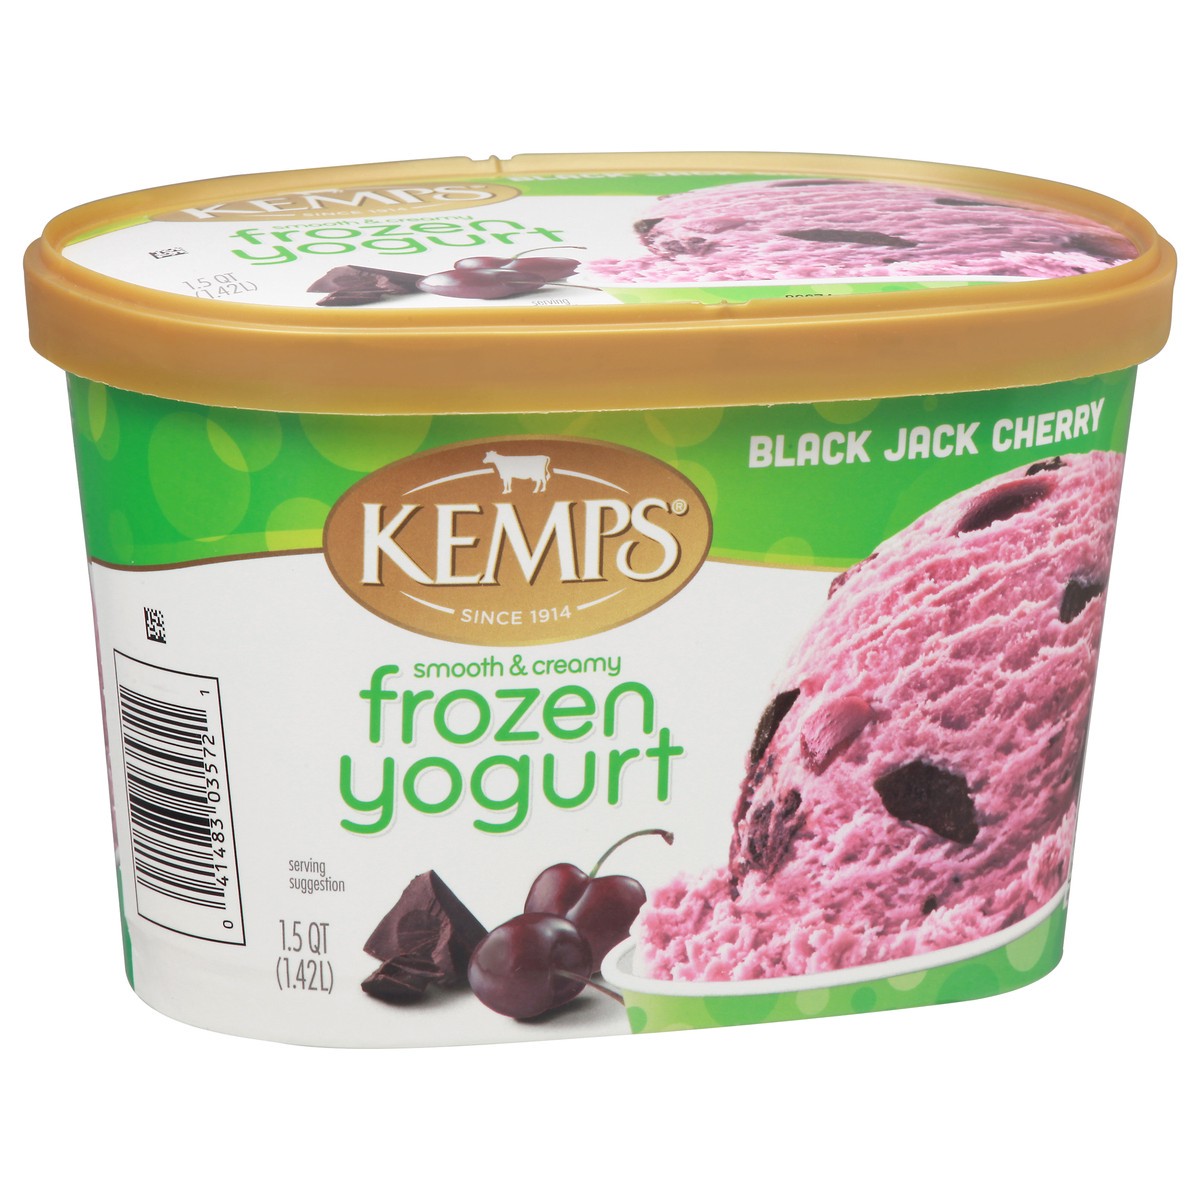 slide 11 of 13, Kemps Black Jack Cherry Low Fat Smooth & Creamy Frozen Yoghurt, 1.5 qt